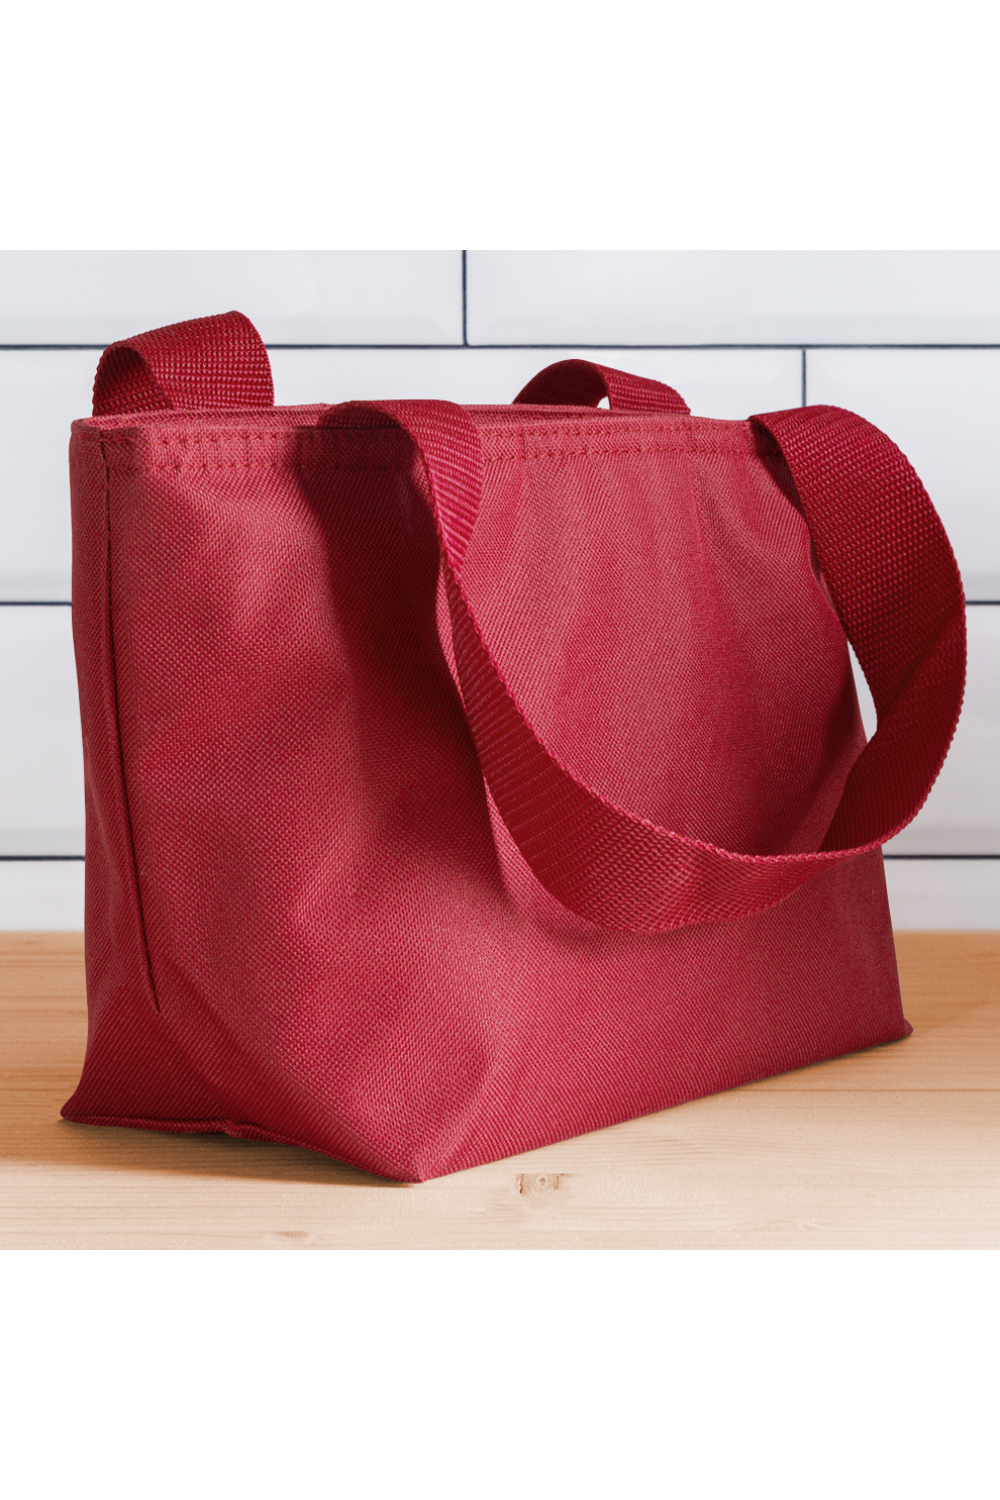 Women Registered Nurse Lunch Bag - red